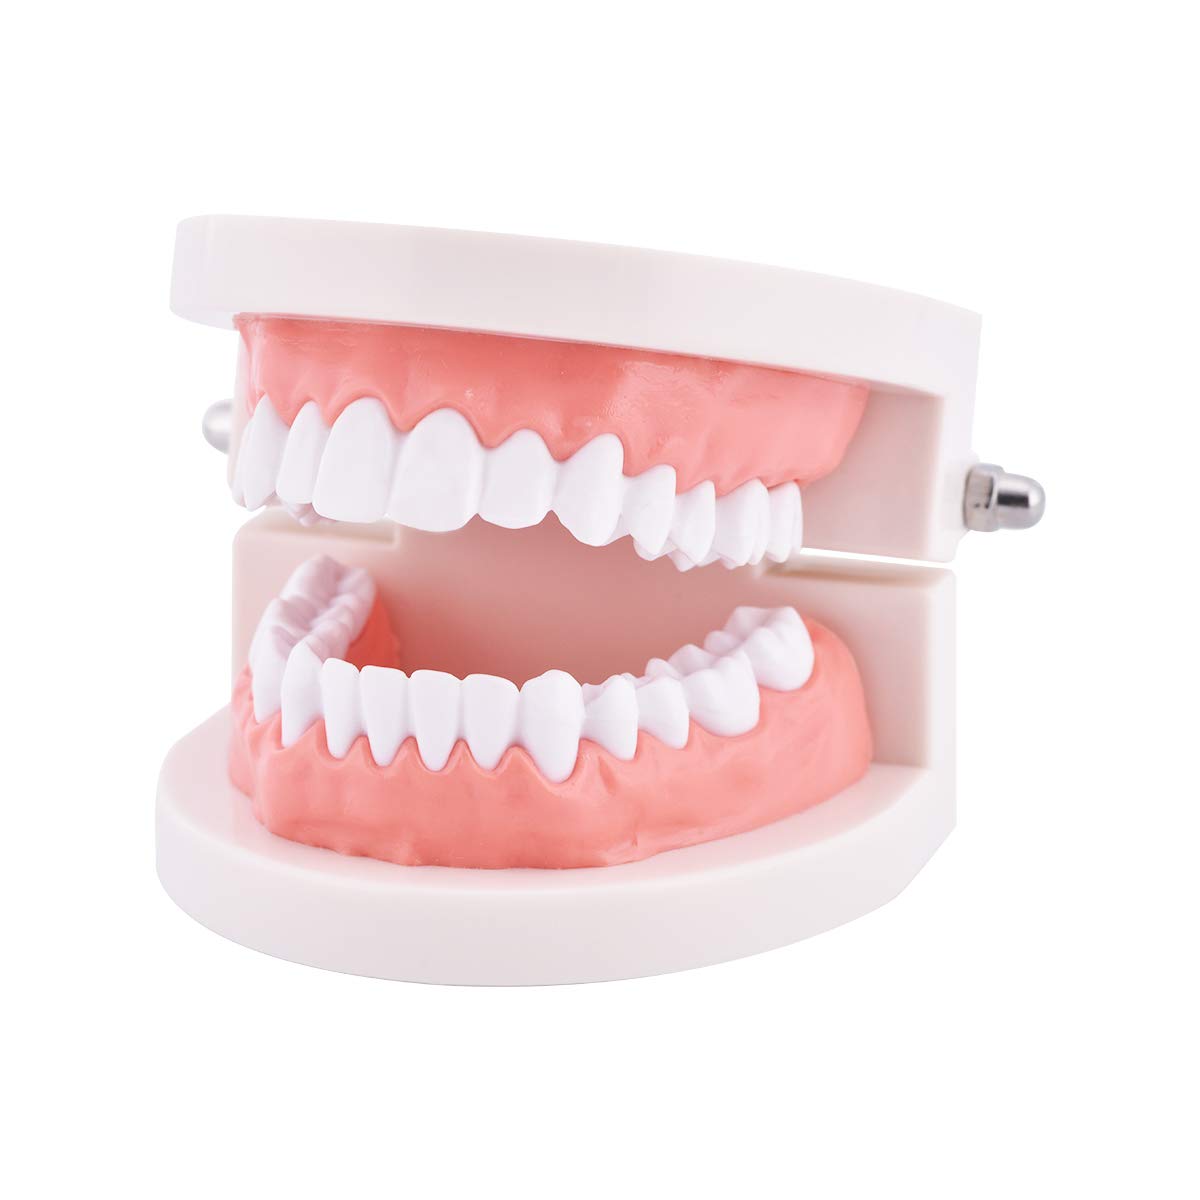 Dental Standard Teeth Model Tooth Brushing Model Typodont Demonstration for Teaching Studying Standard Size